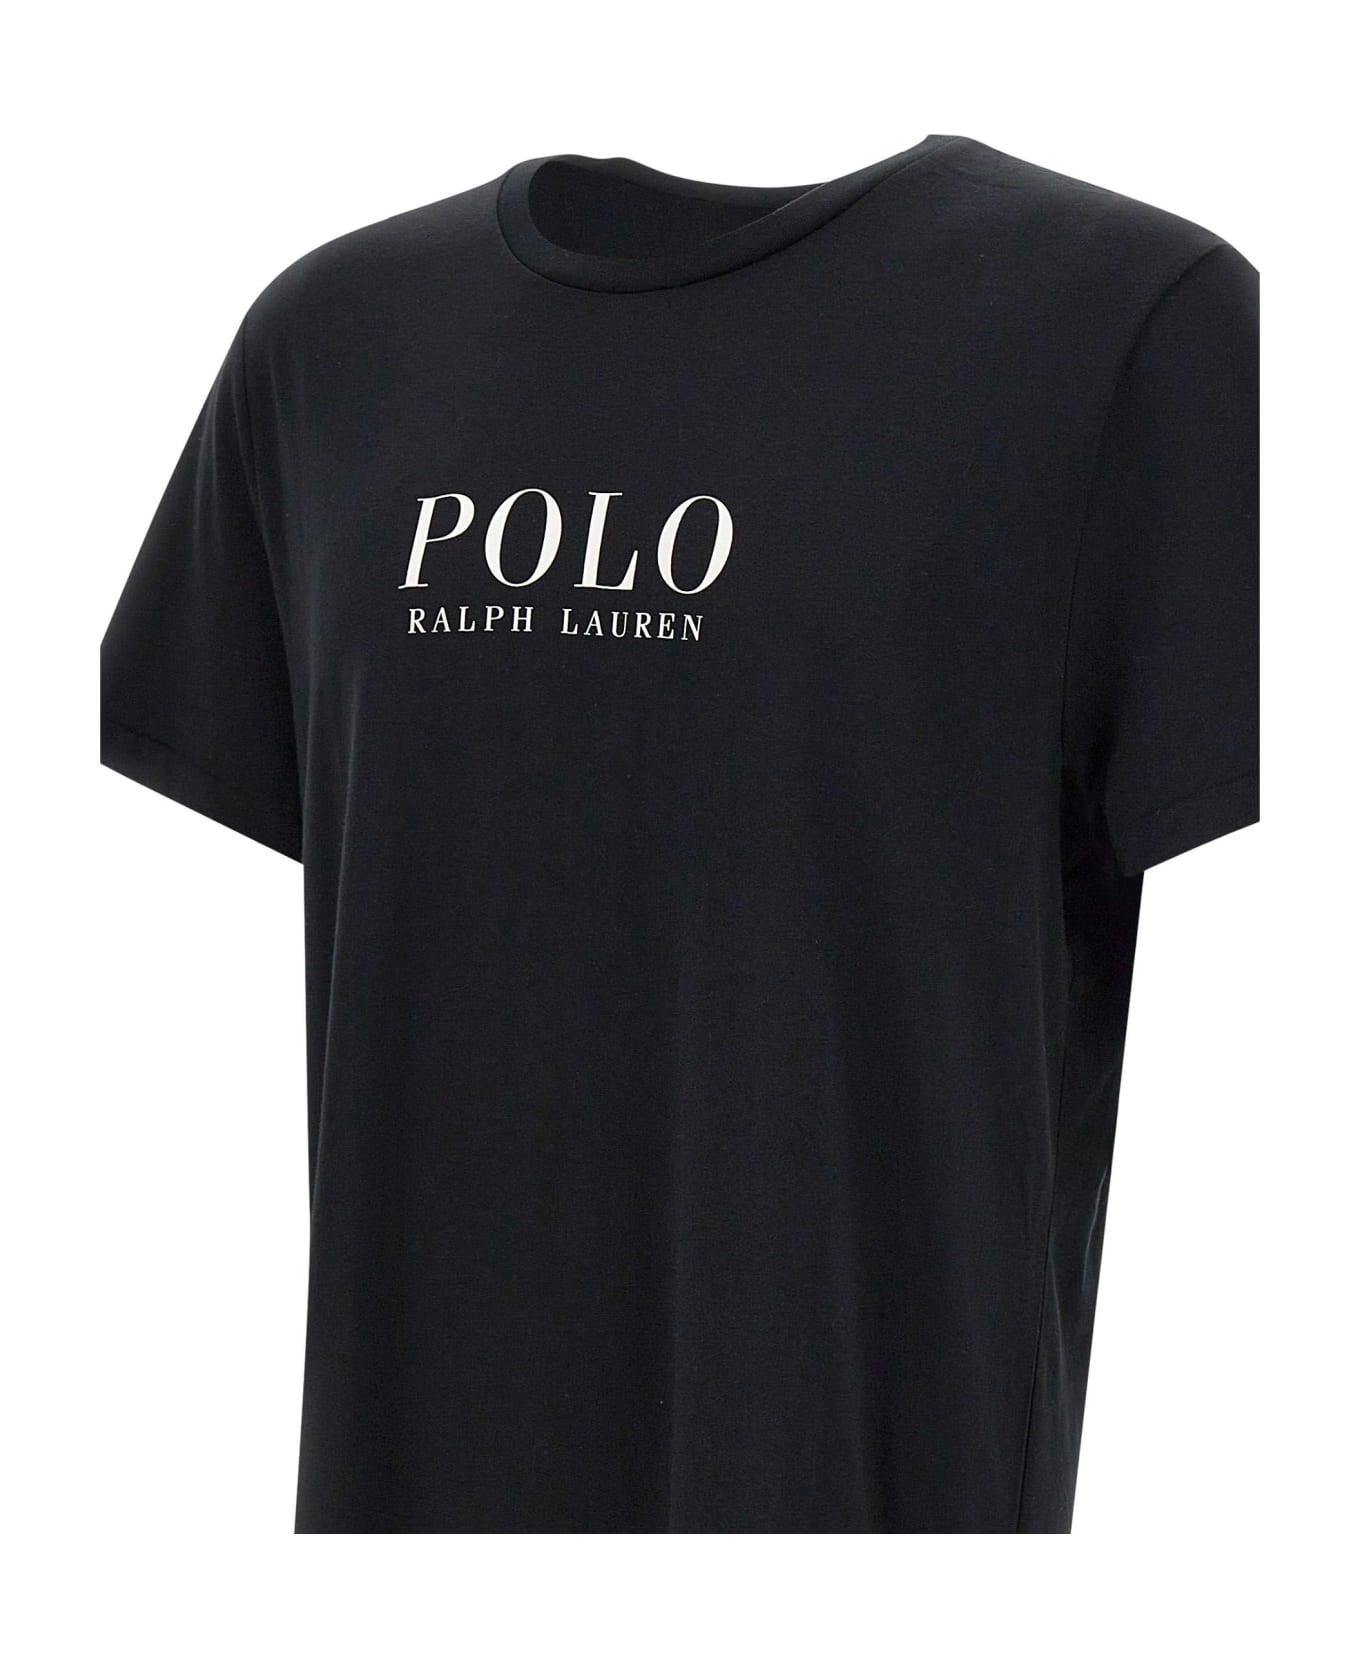 Polo Ralph Lauren 'msw' Cotton T-shirt - Polo black シャツ